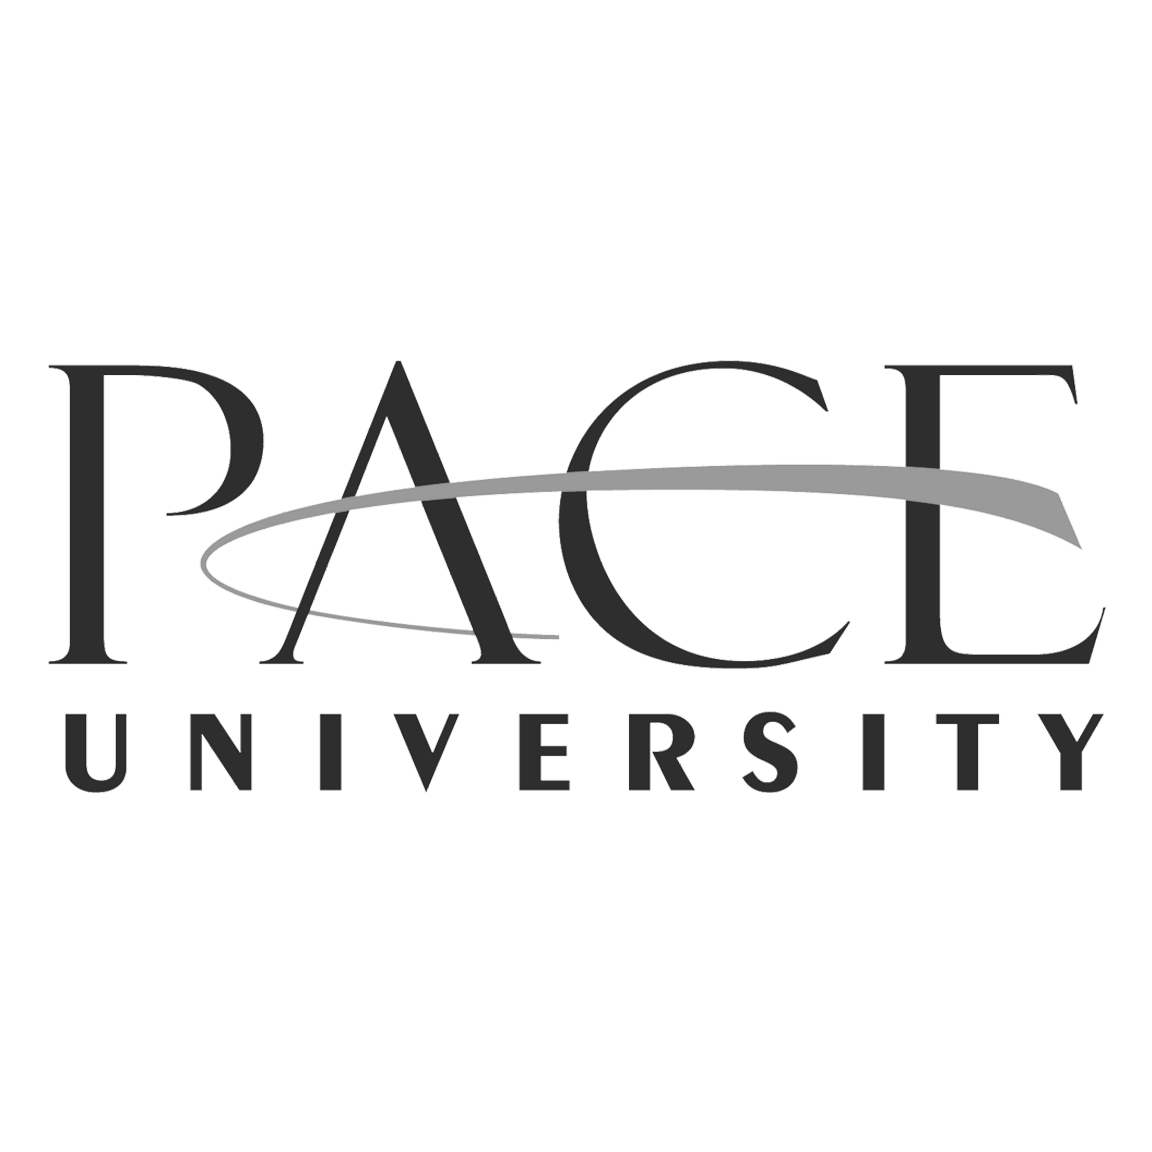 Pace_University_logo BW.png